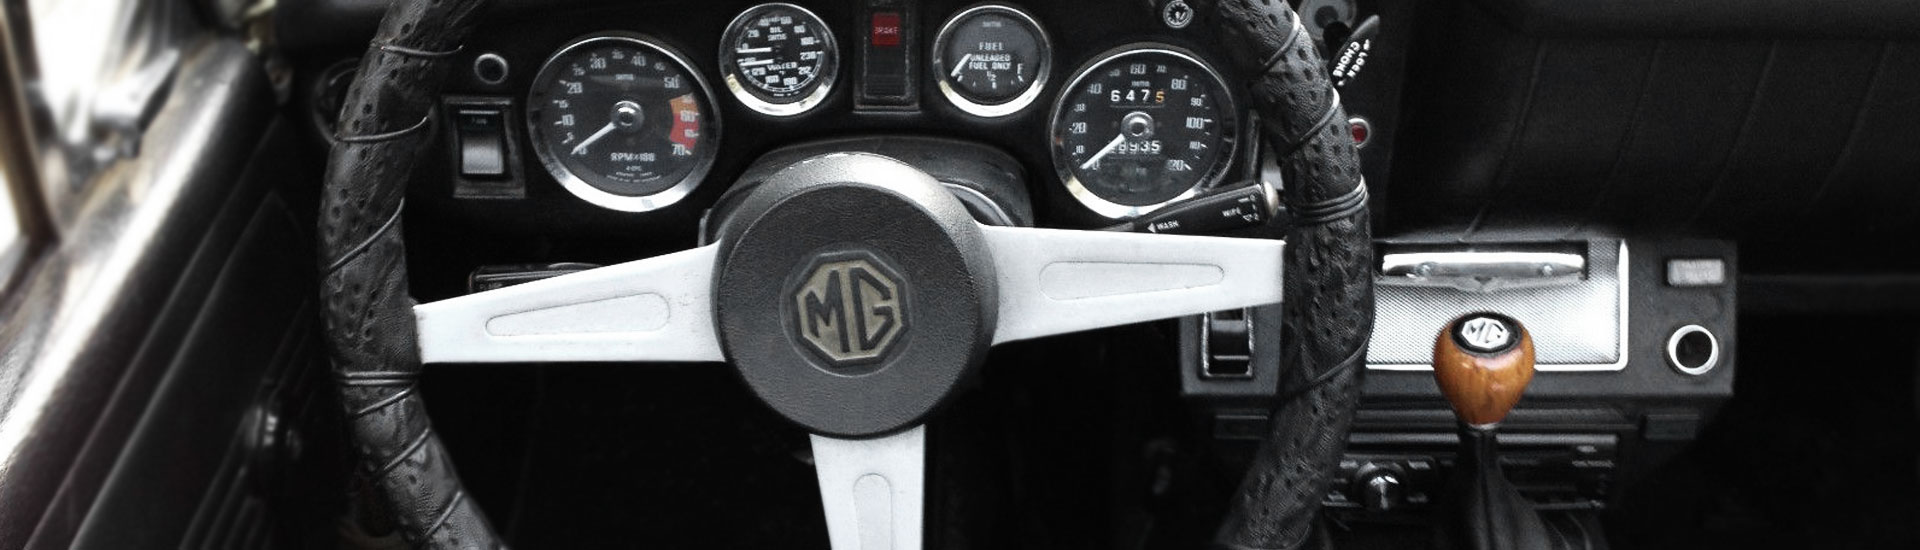 MG Midget Custom Dash Kits